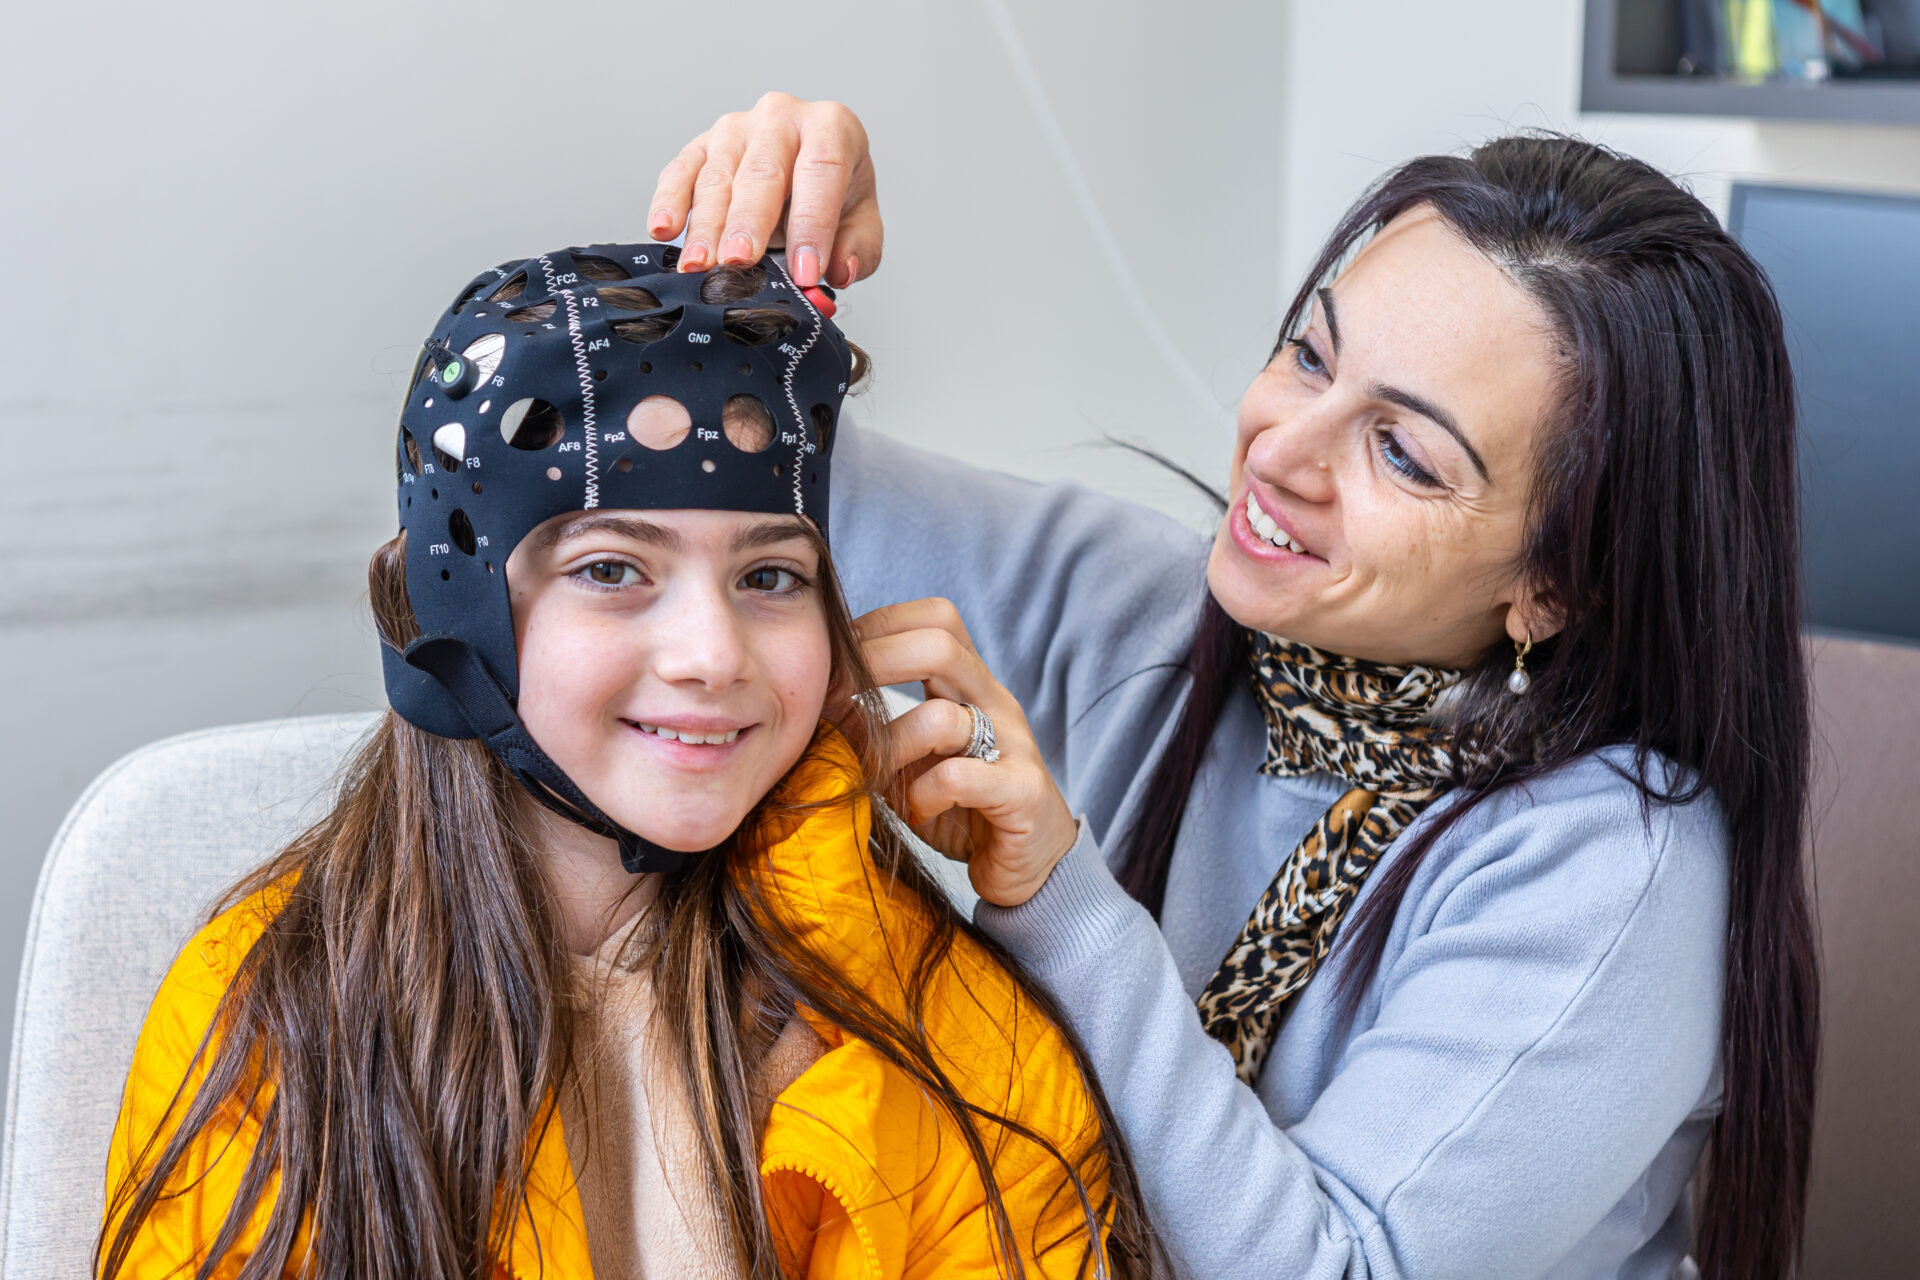 Non-invasive brain stimulation treatment can ease ADHD symptoms in children